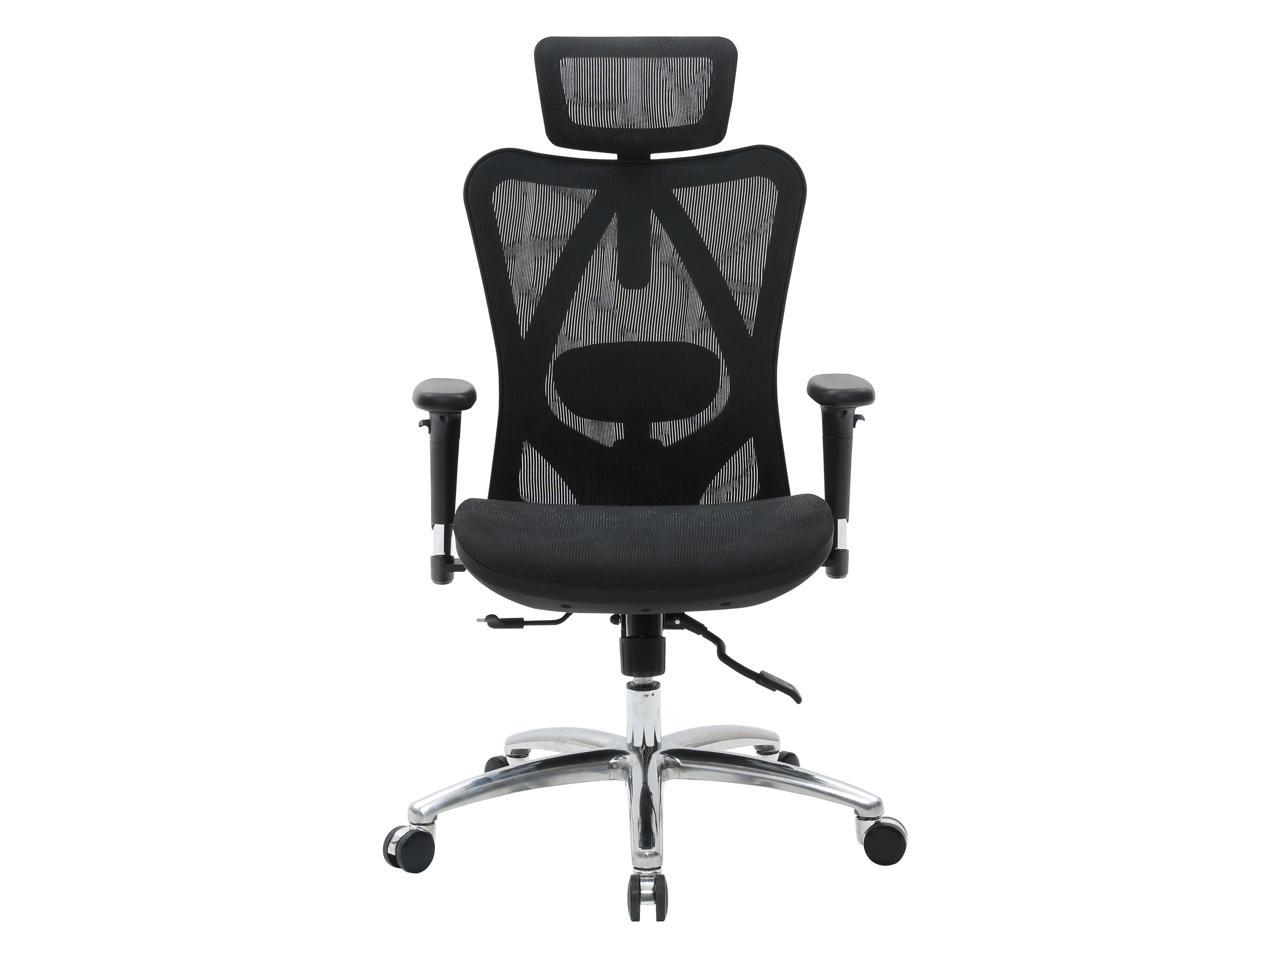 SIHOO M57 Ergonomic Office Chair, High Back Computer Desk